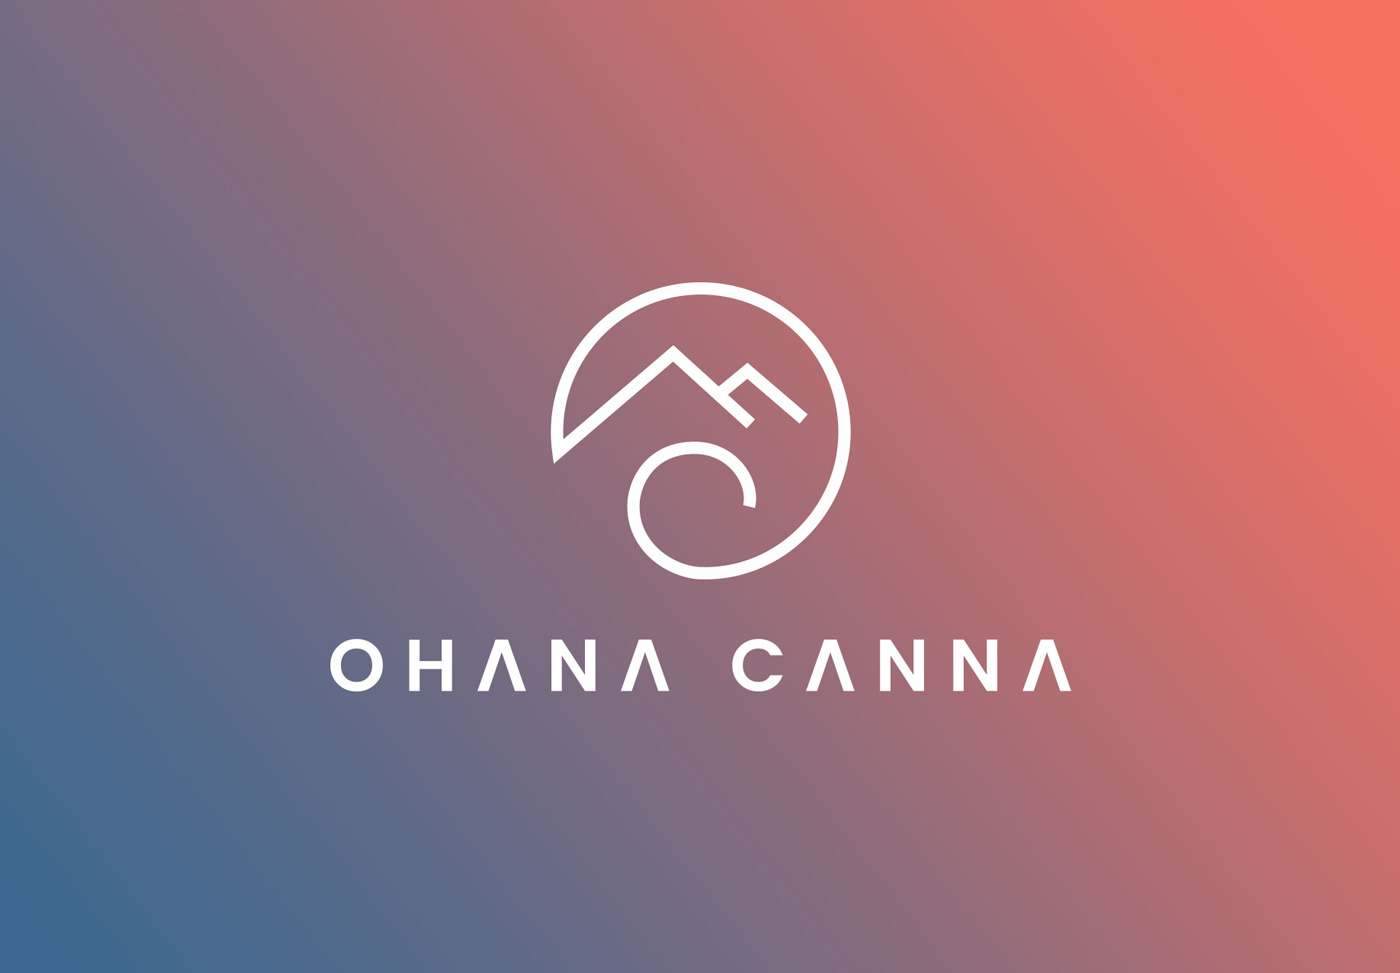 Cannabis farm branding and logo design for Ohana Canna